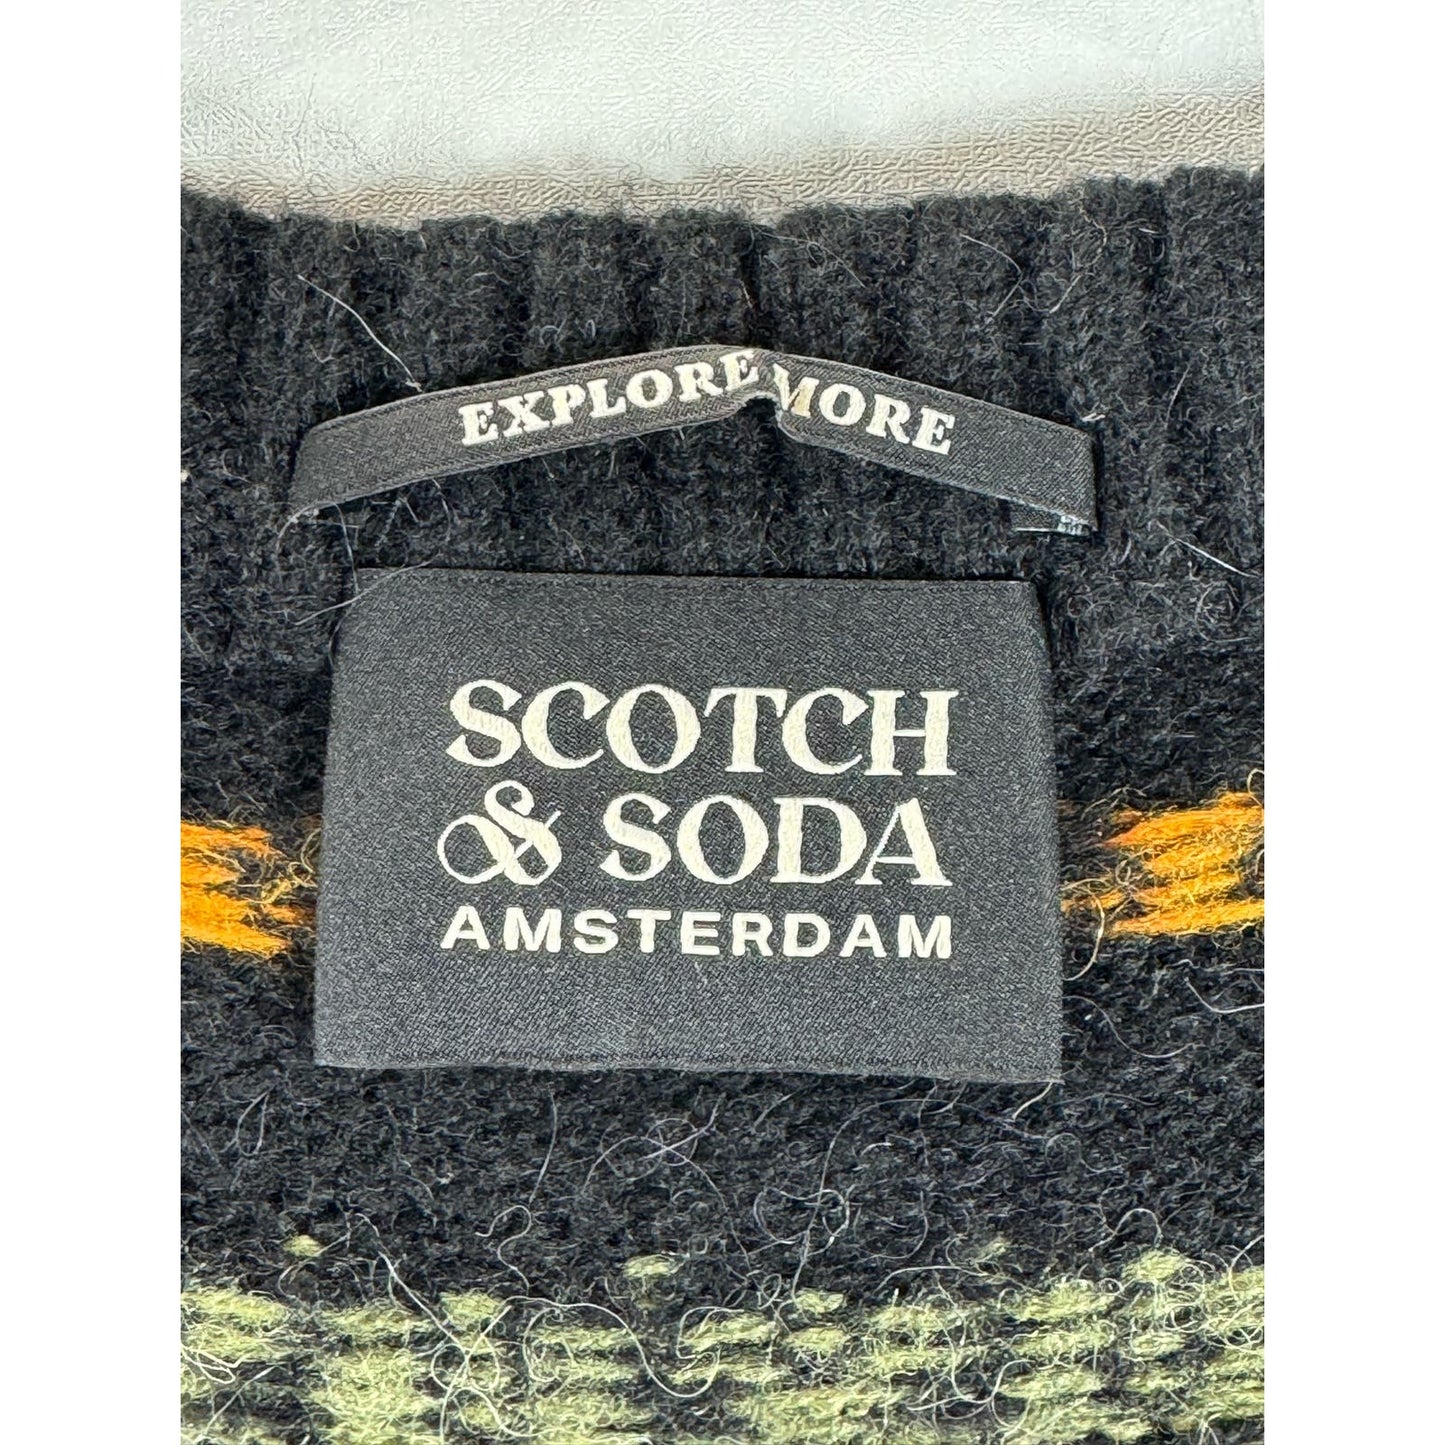 SCOTCH & SODA Women's Black Relaxed-Fit Fair Isle Knit V-Neck Sweater Vest SZ L